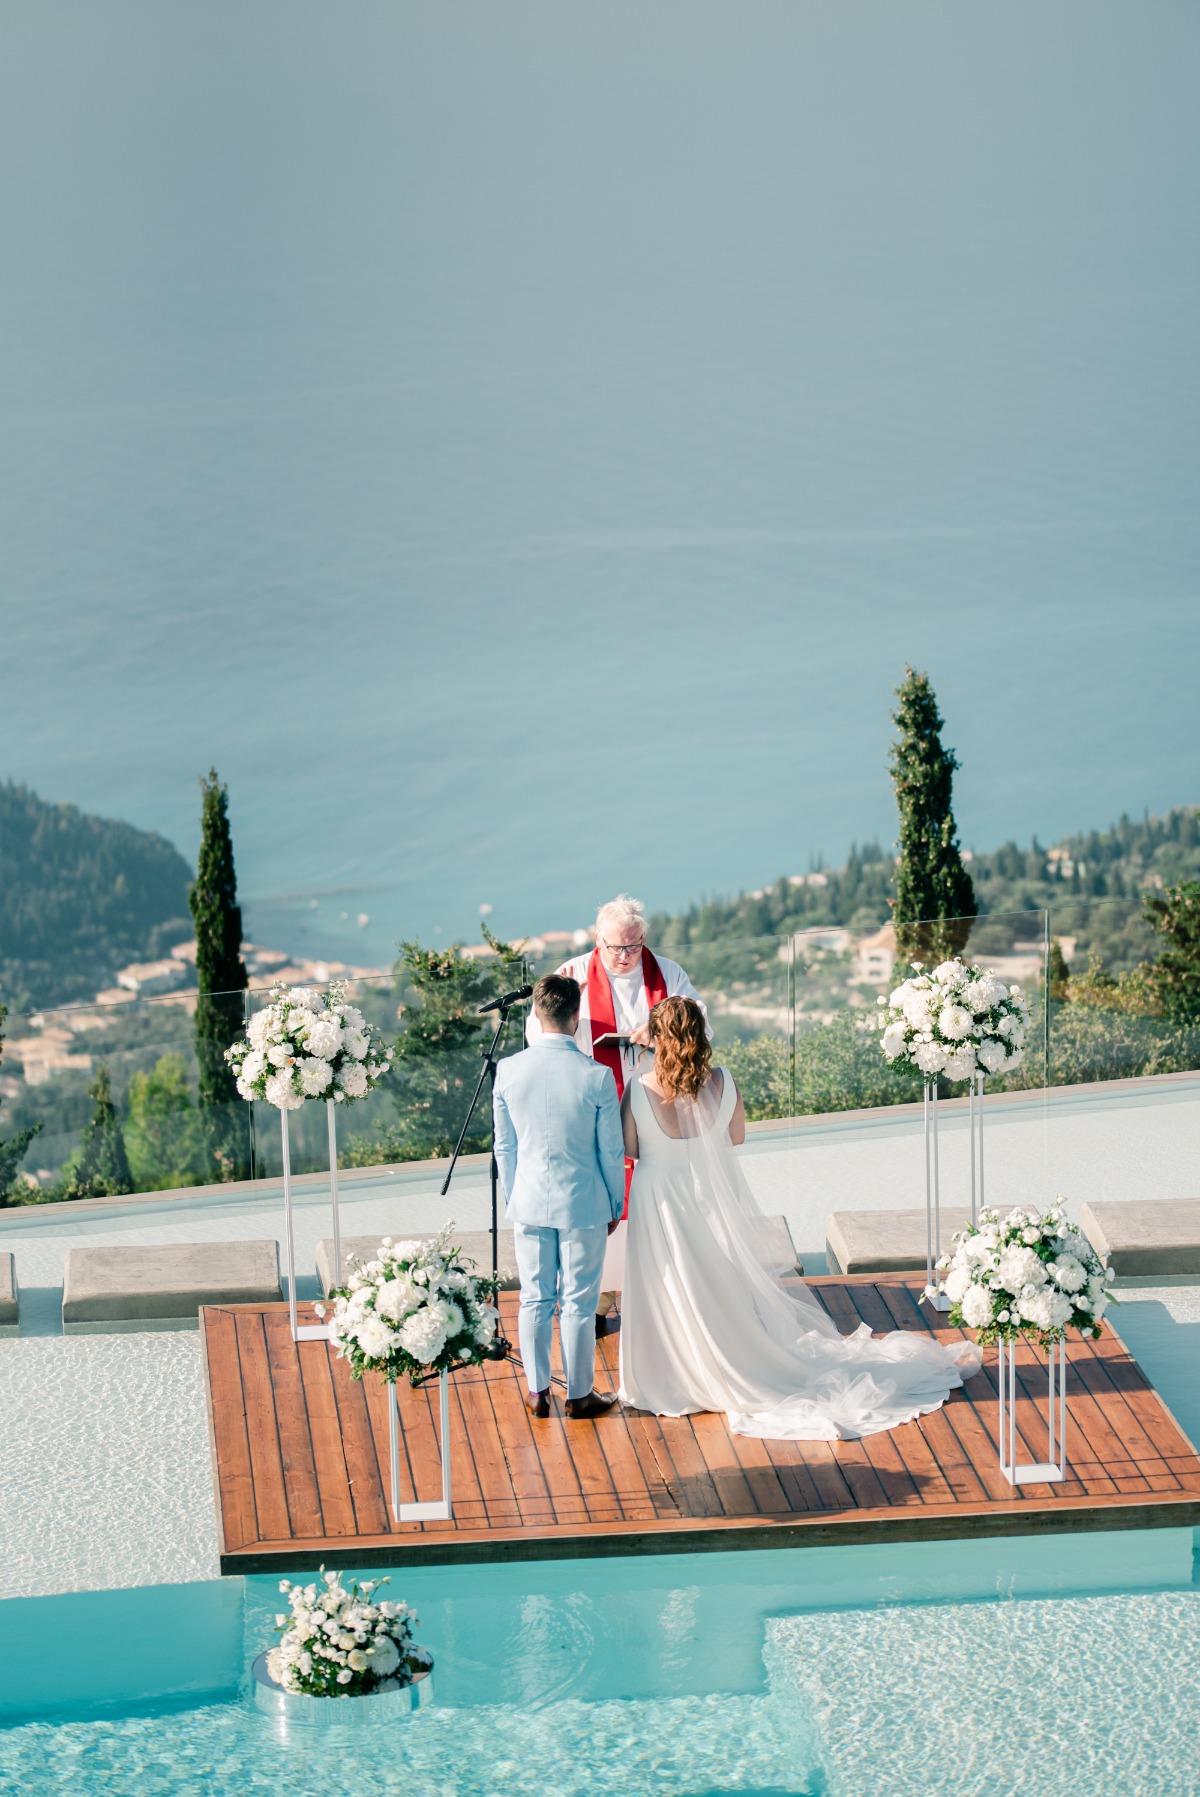 Religious wedding ceremony in Lefkas Greece restaurant